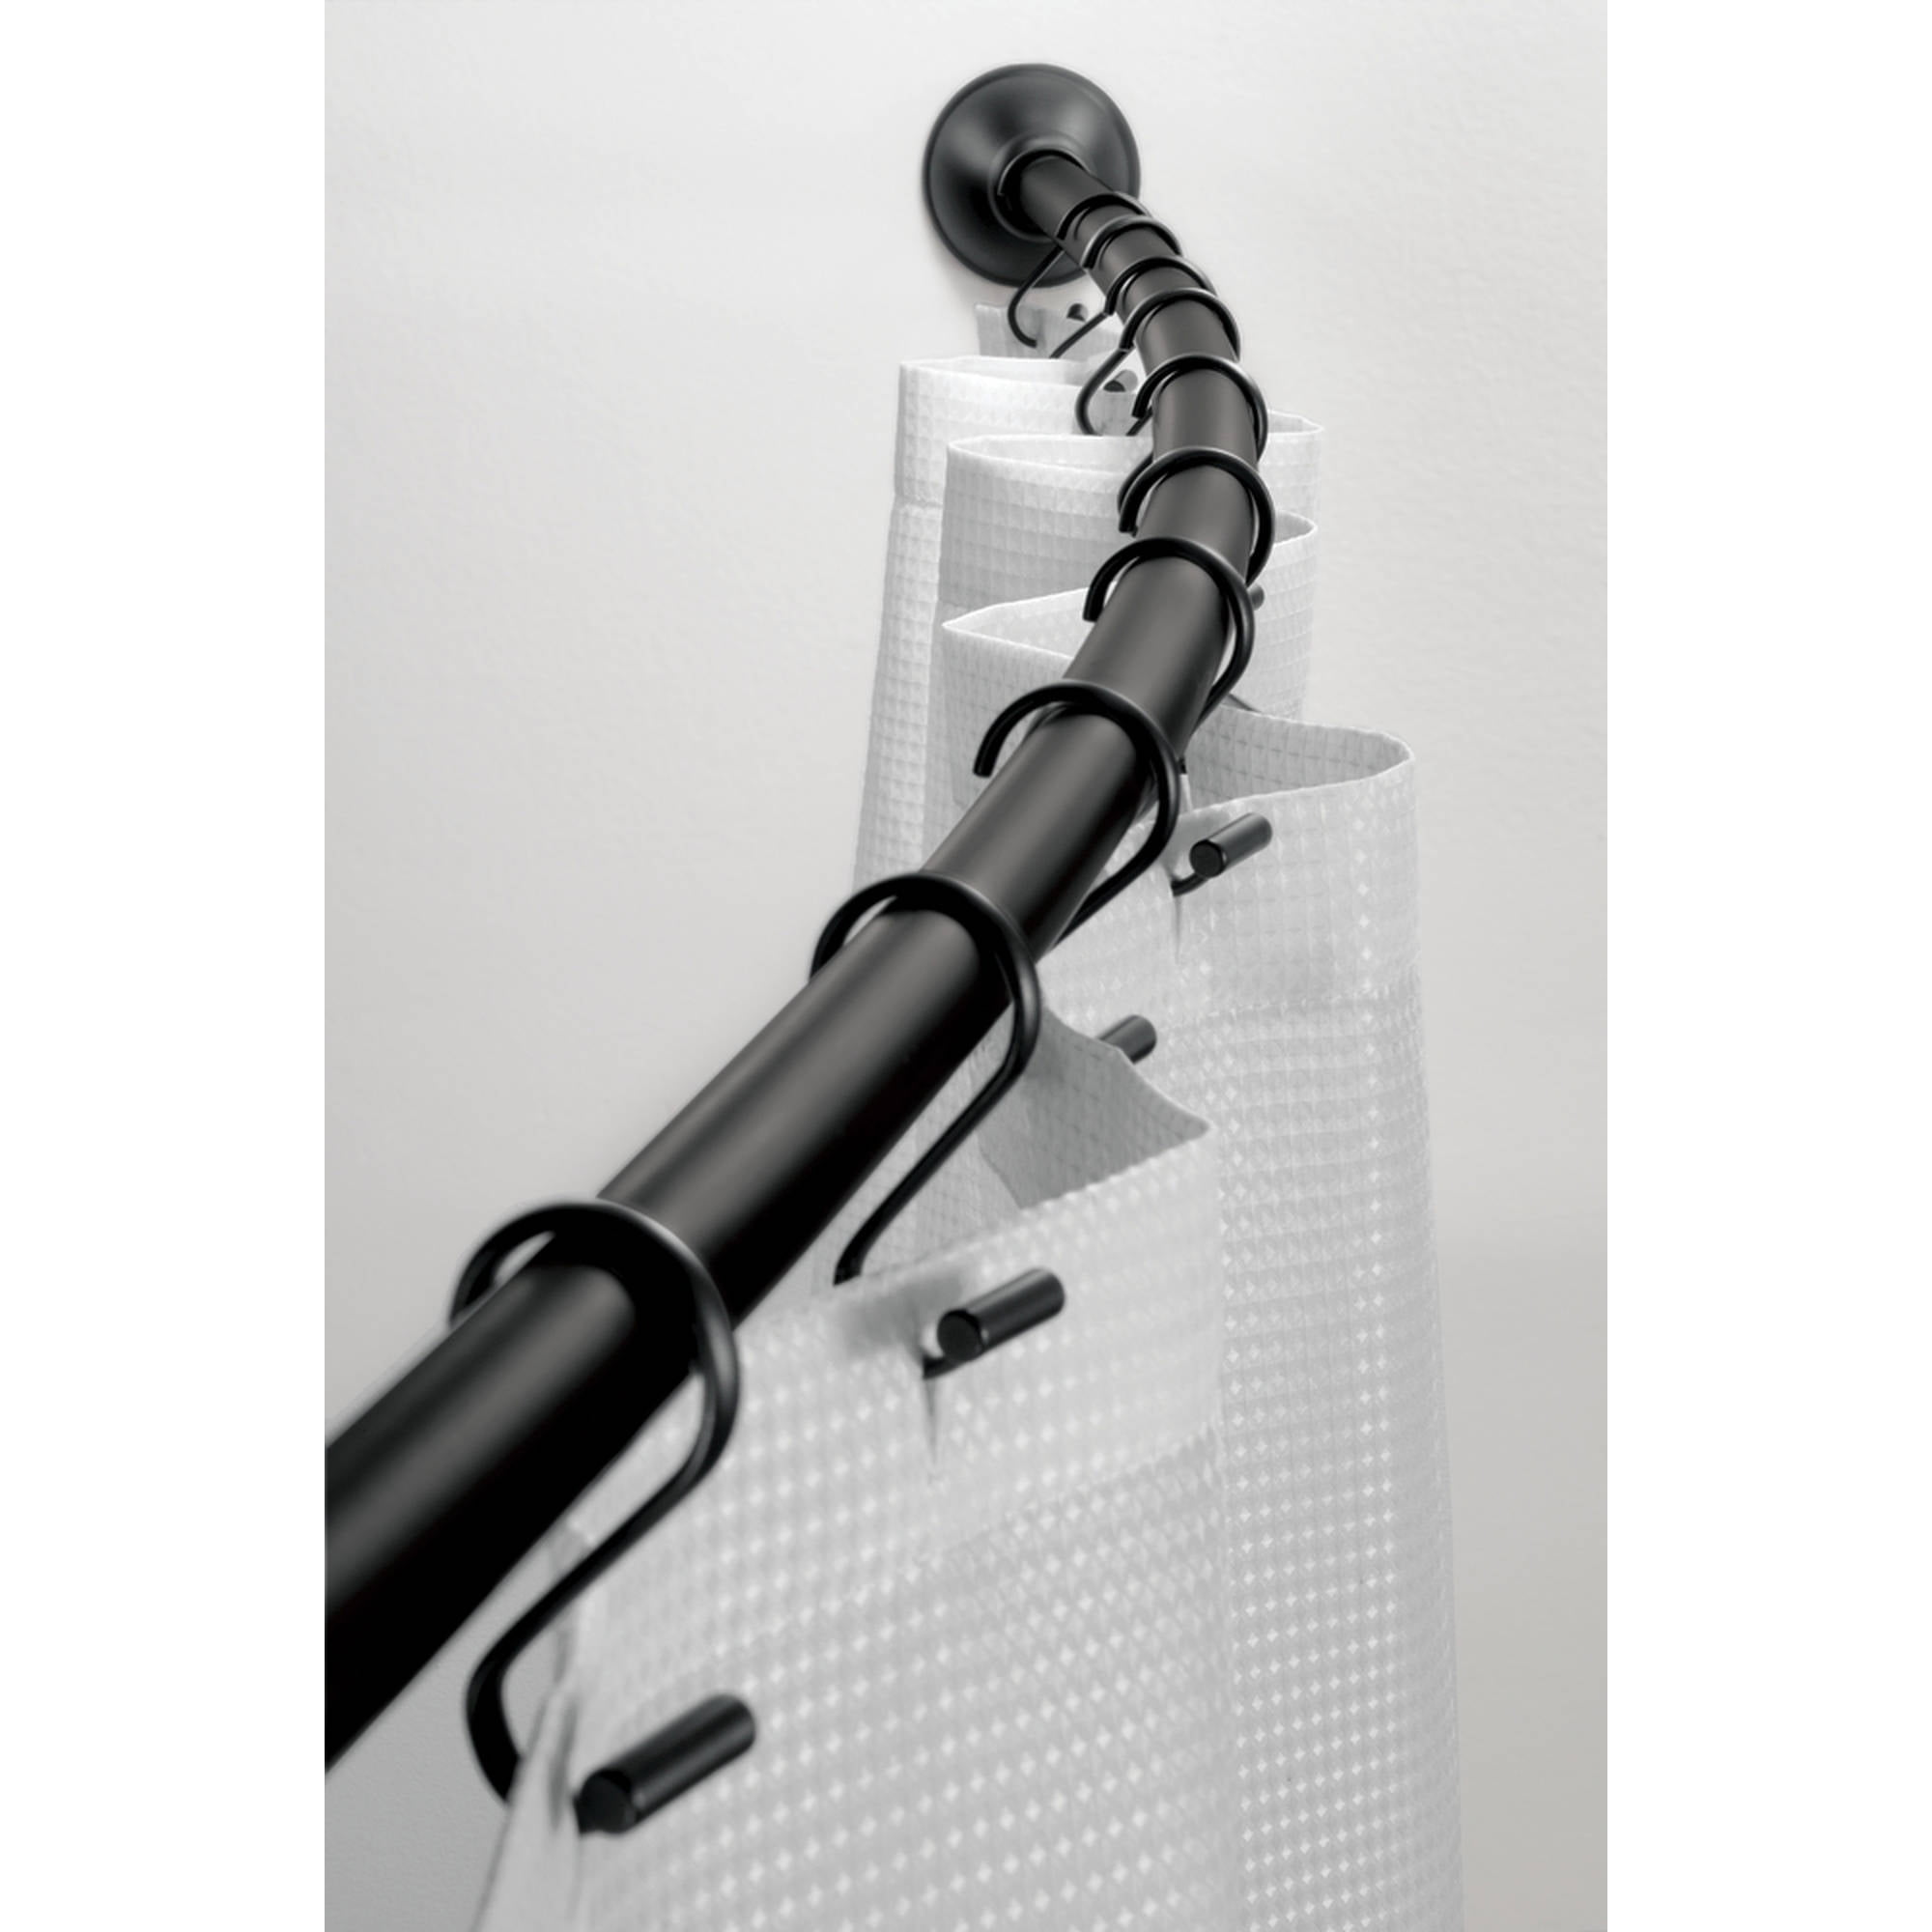 Meriville 1-inch Diameter Metal Spring Tension Rod, Adjustable